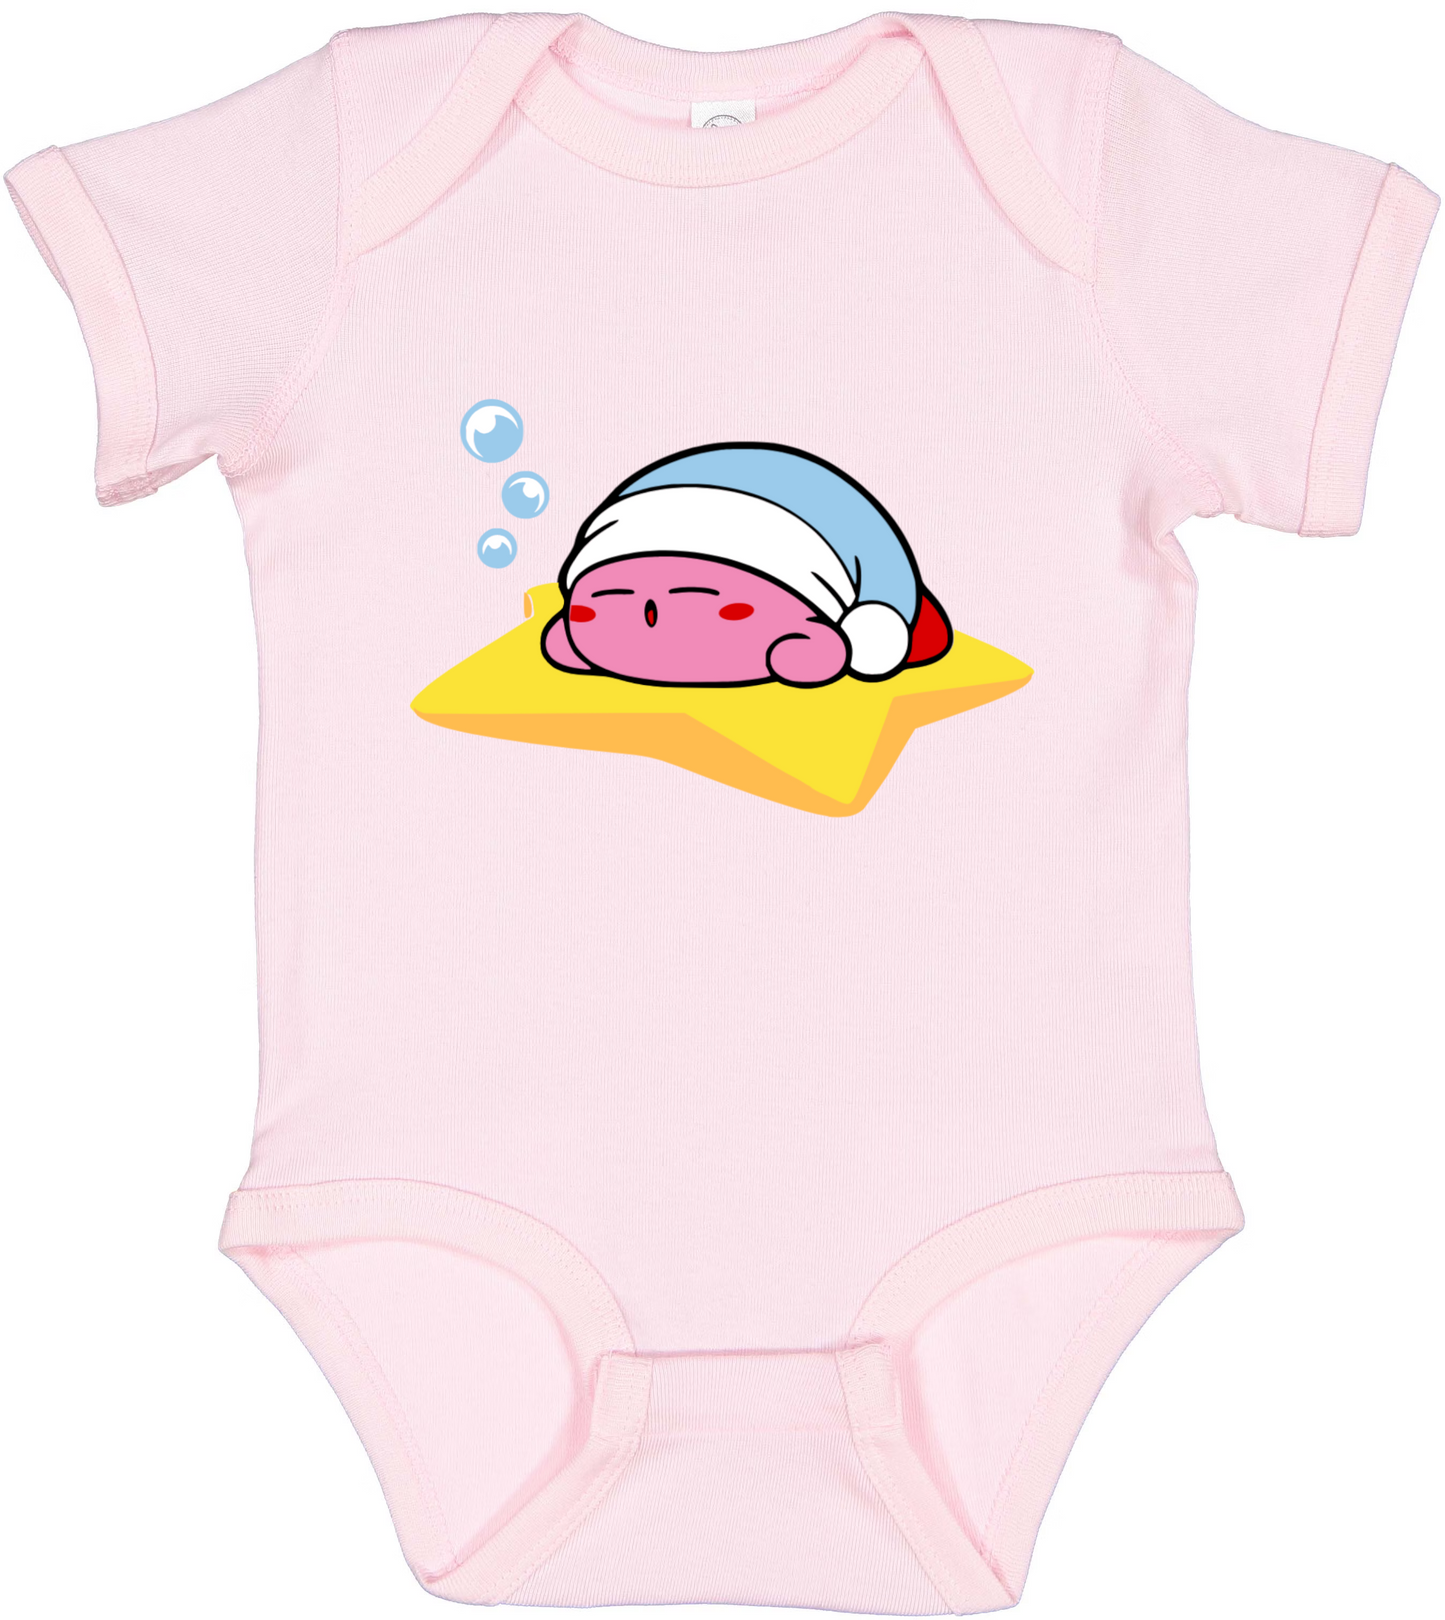 Sleeping "Baby Kirby" Baby Onesie Bodysuit